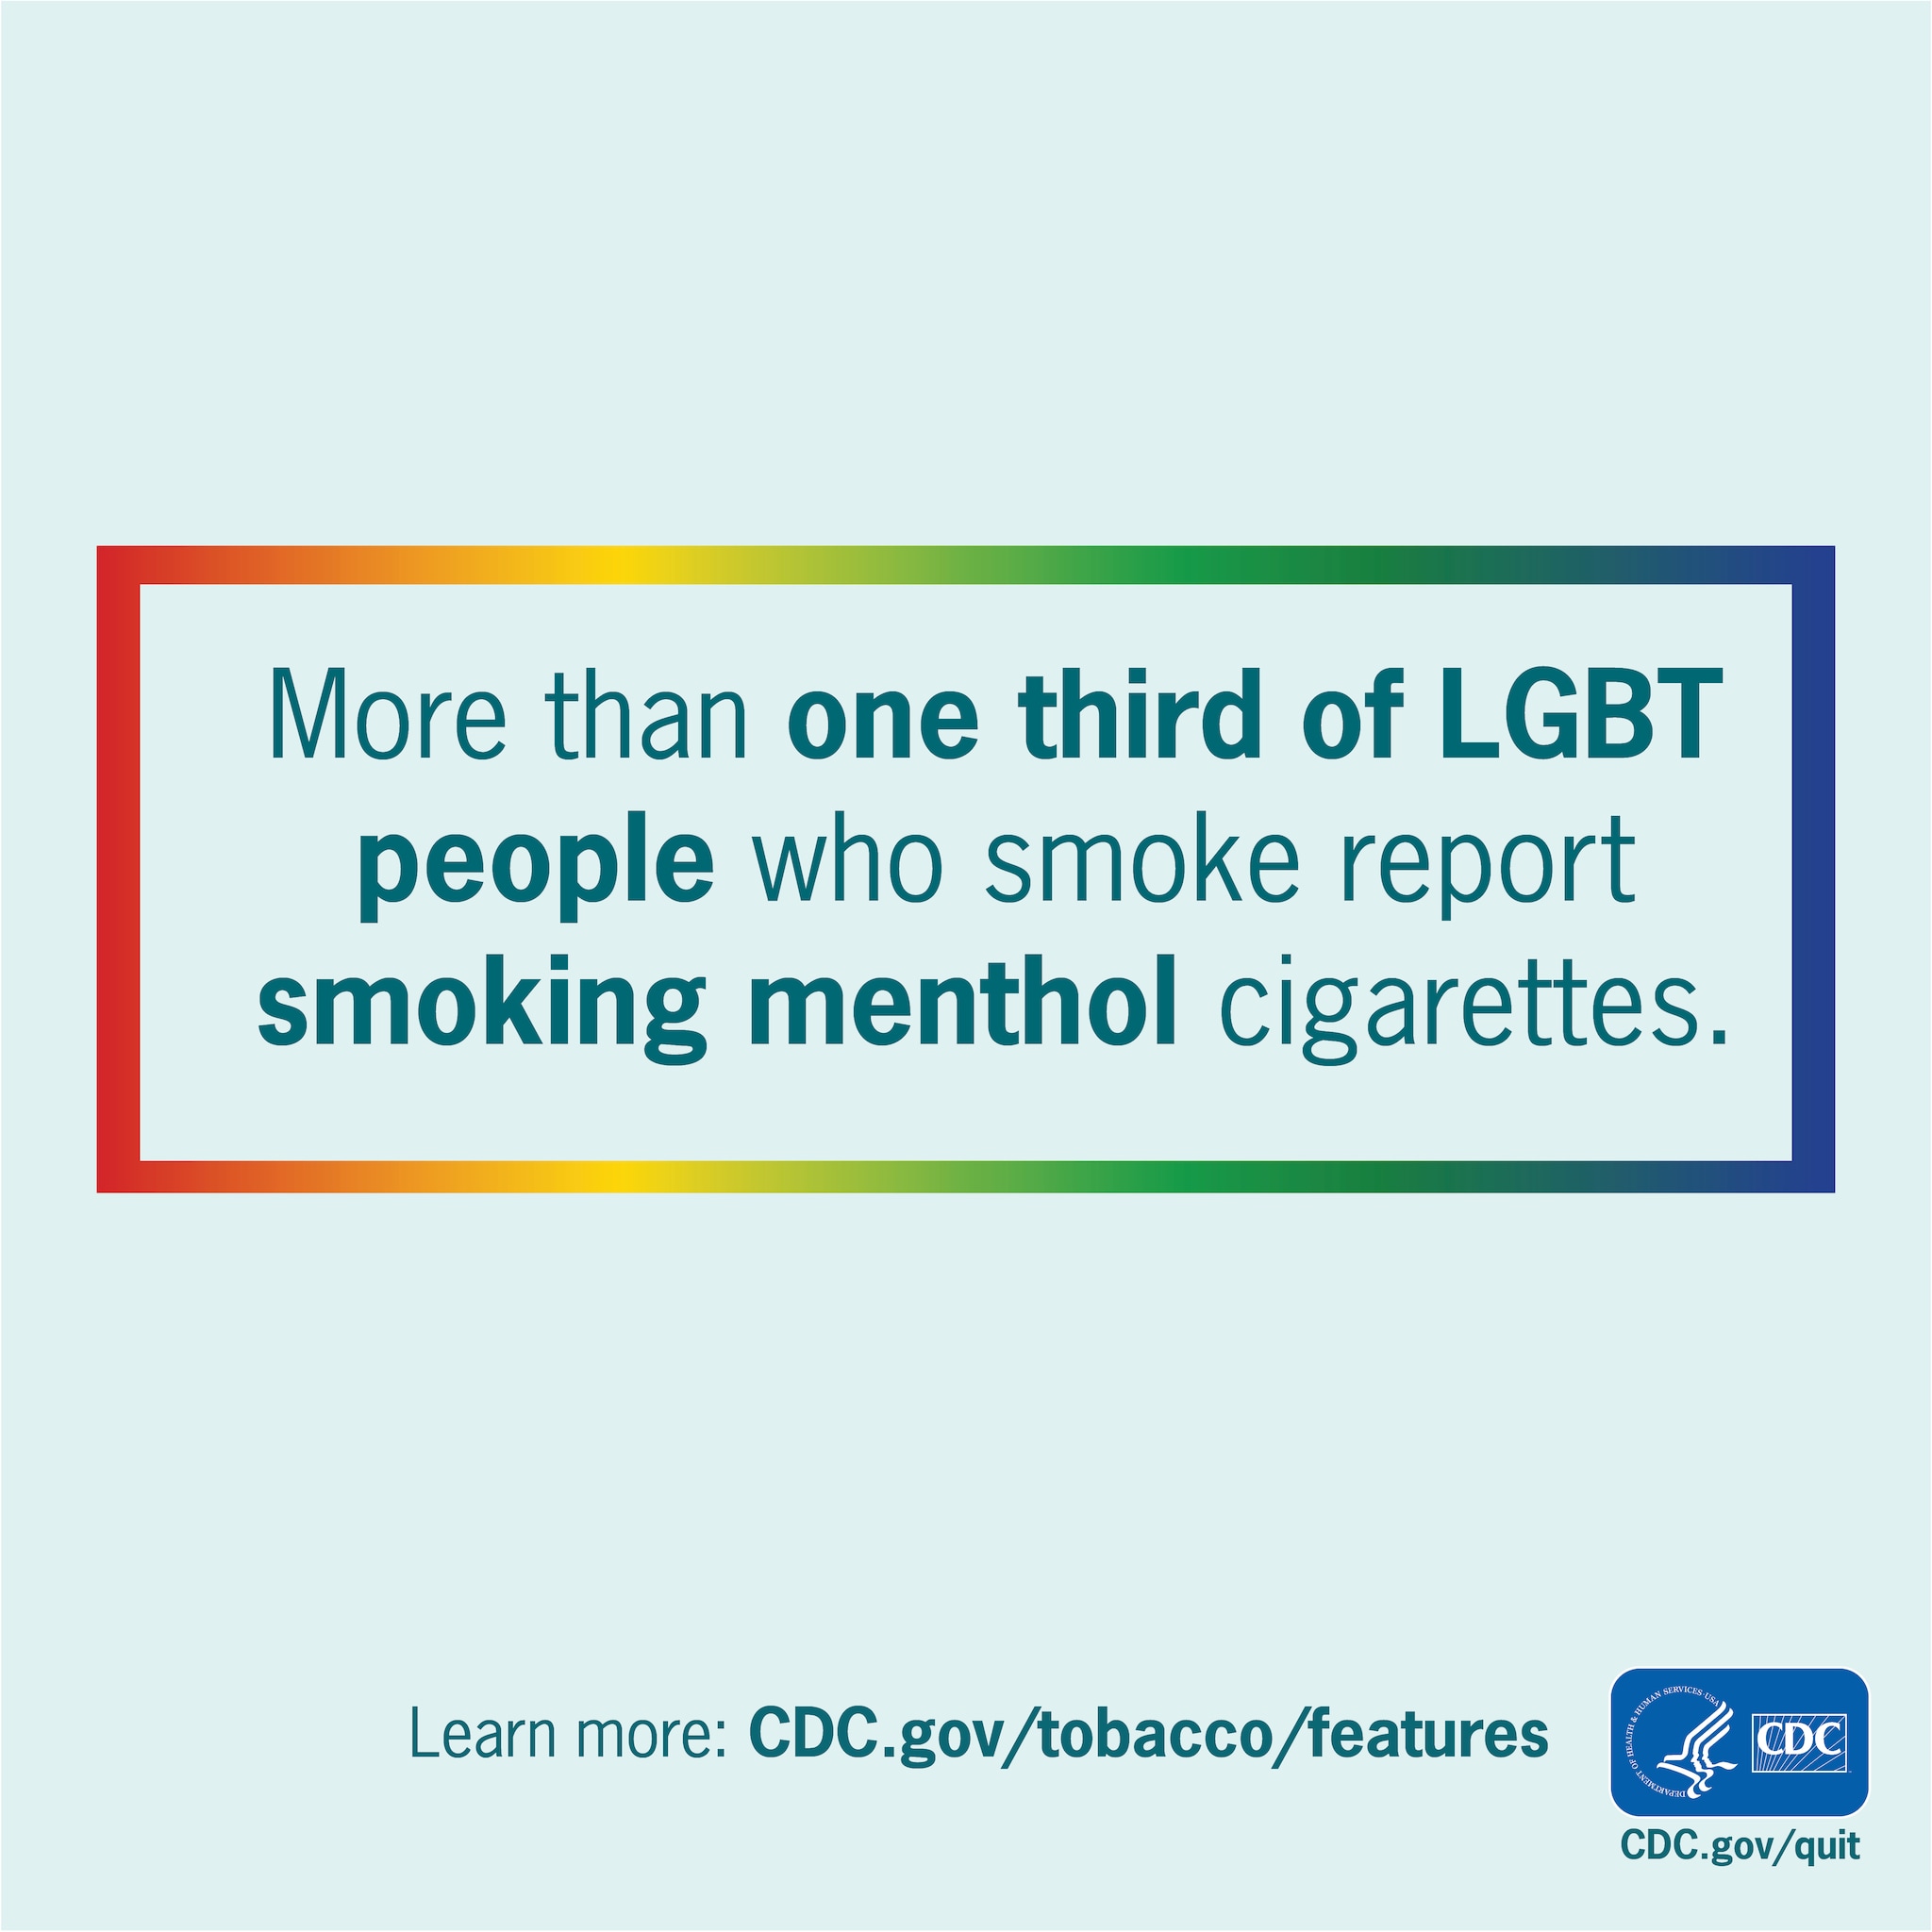 More than one third LGBT people who smoke report smoking menthol cigarettes.